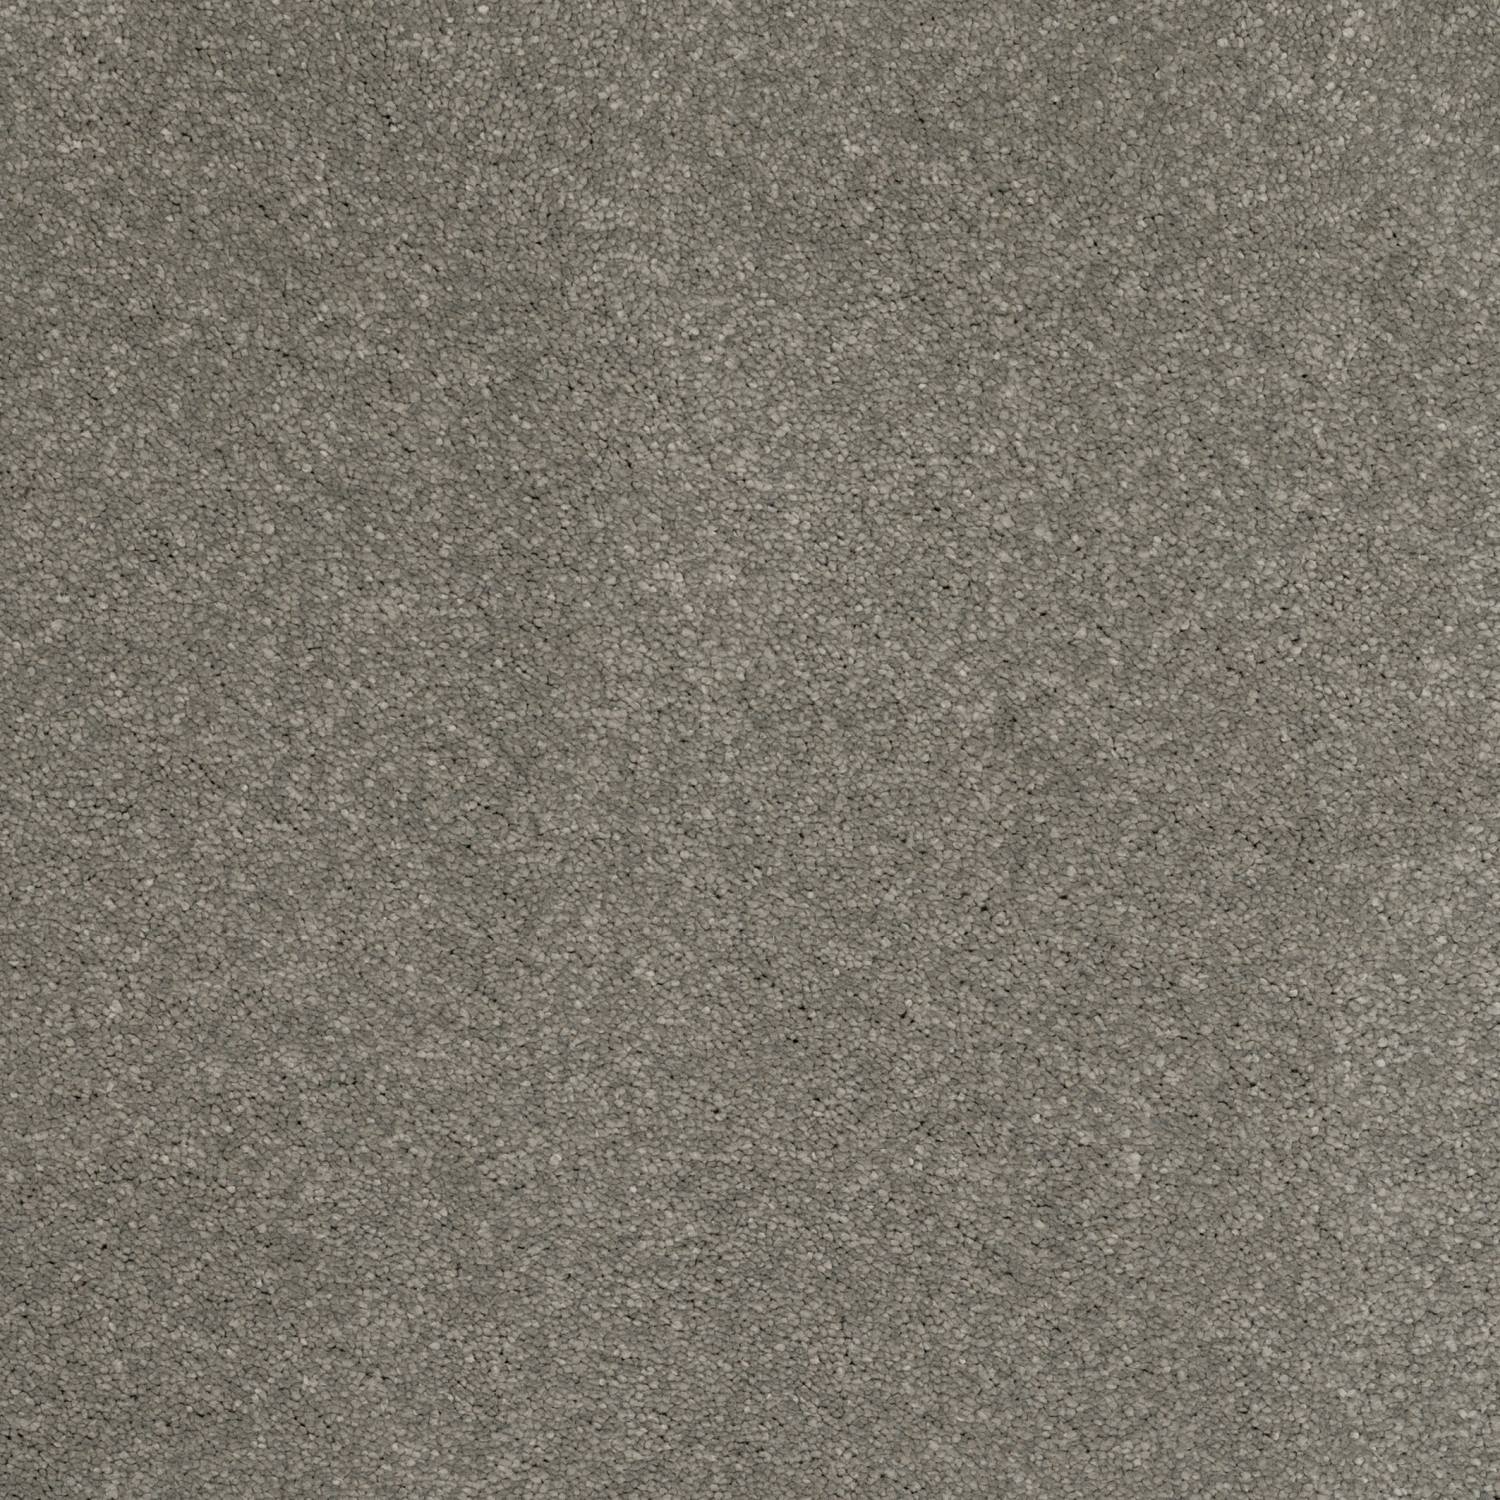 Obsession Twist Luxury Deep Pile Carpet - 714 Silver